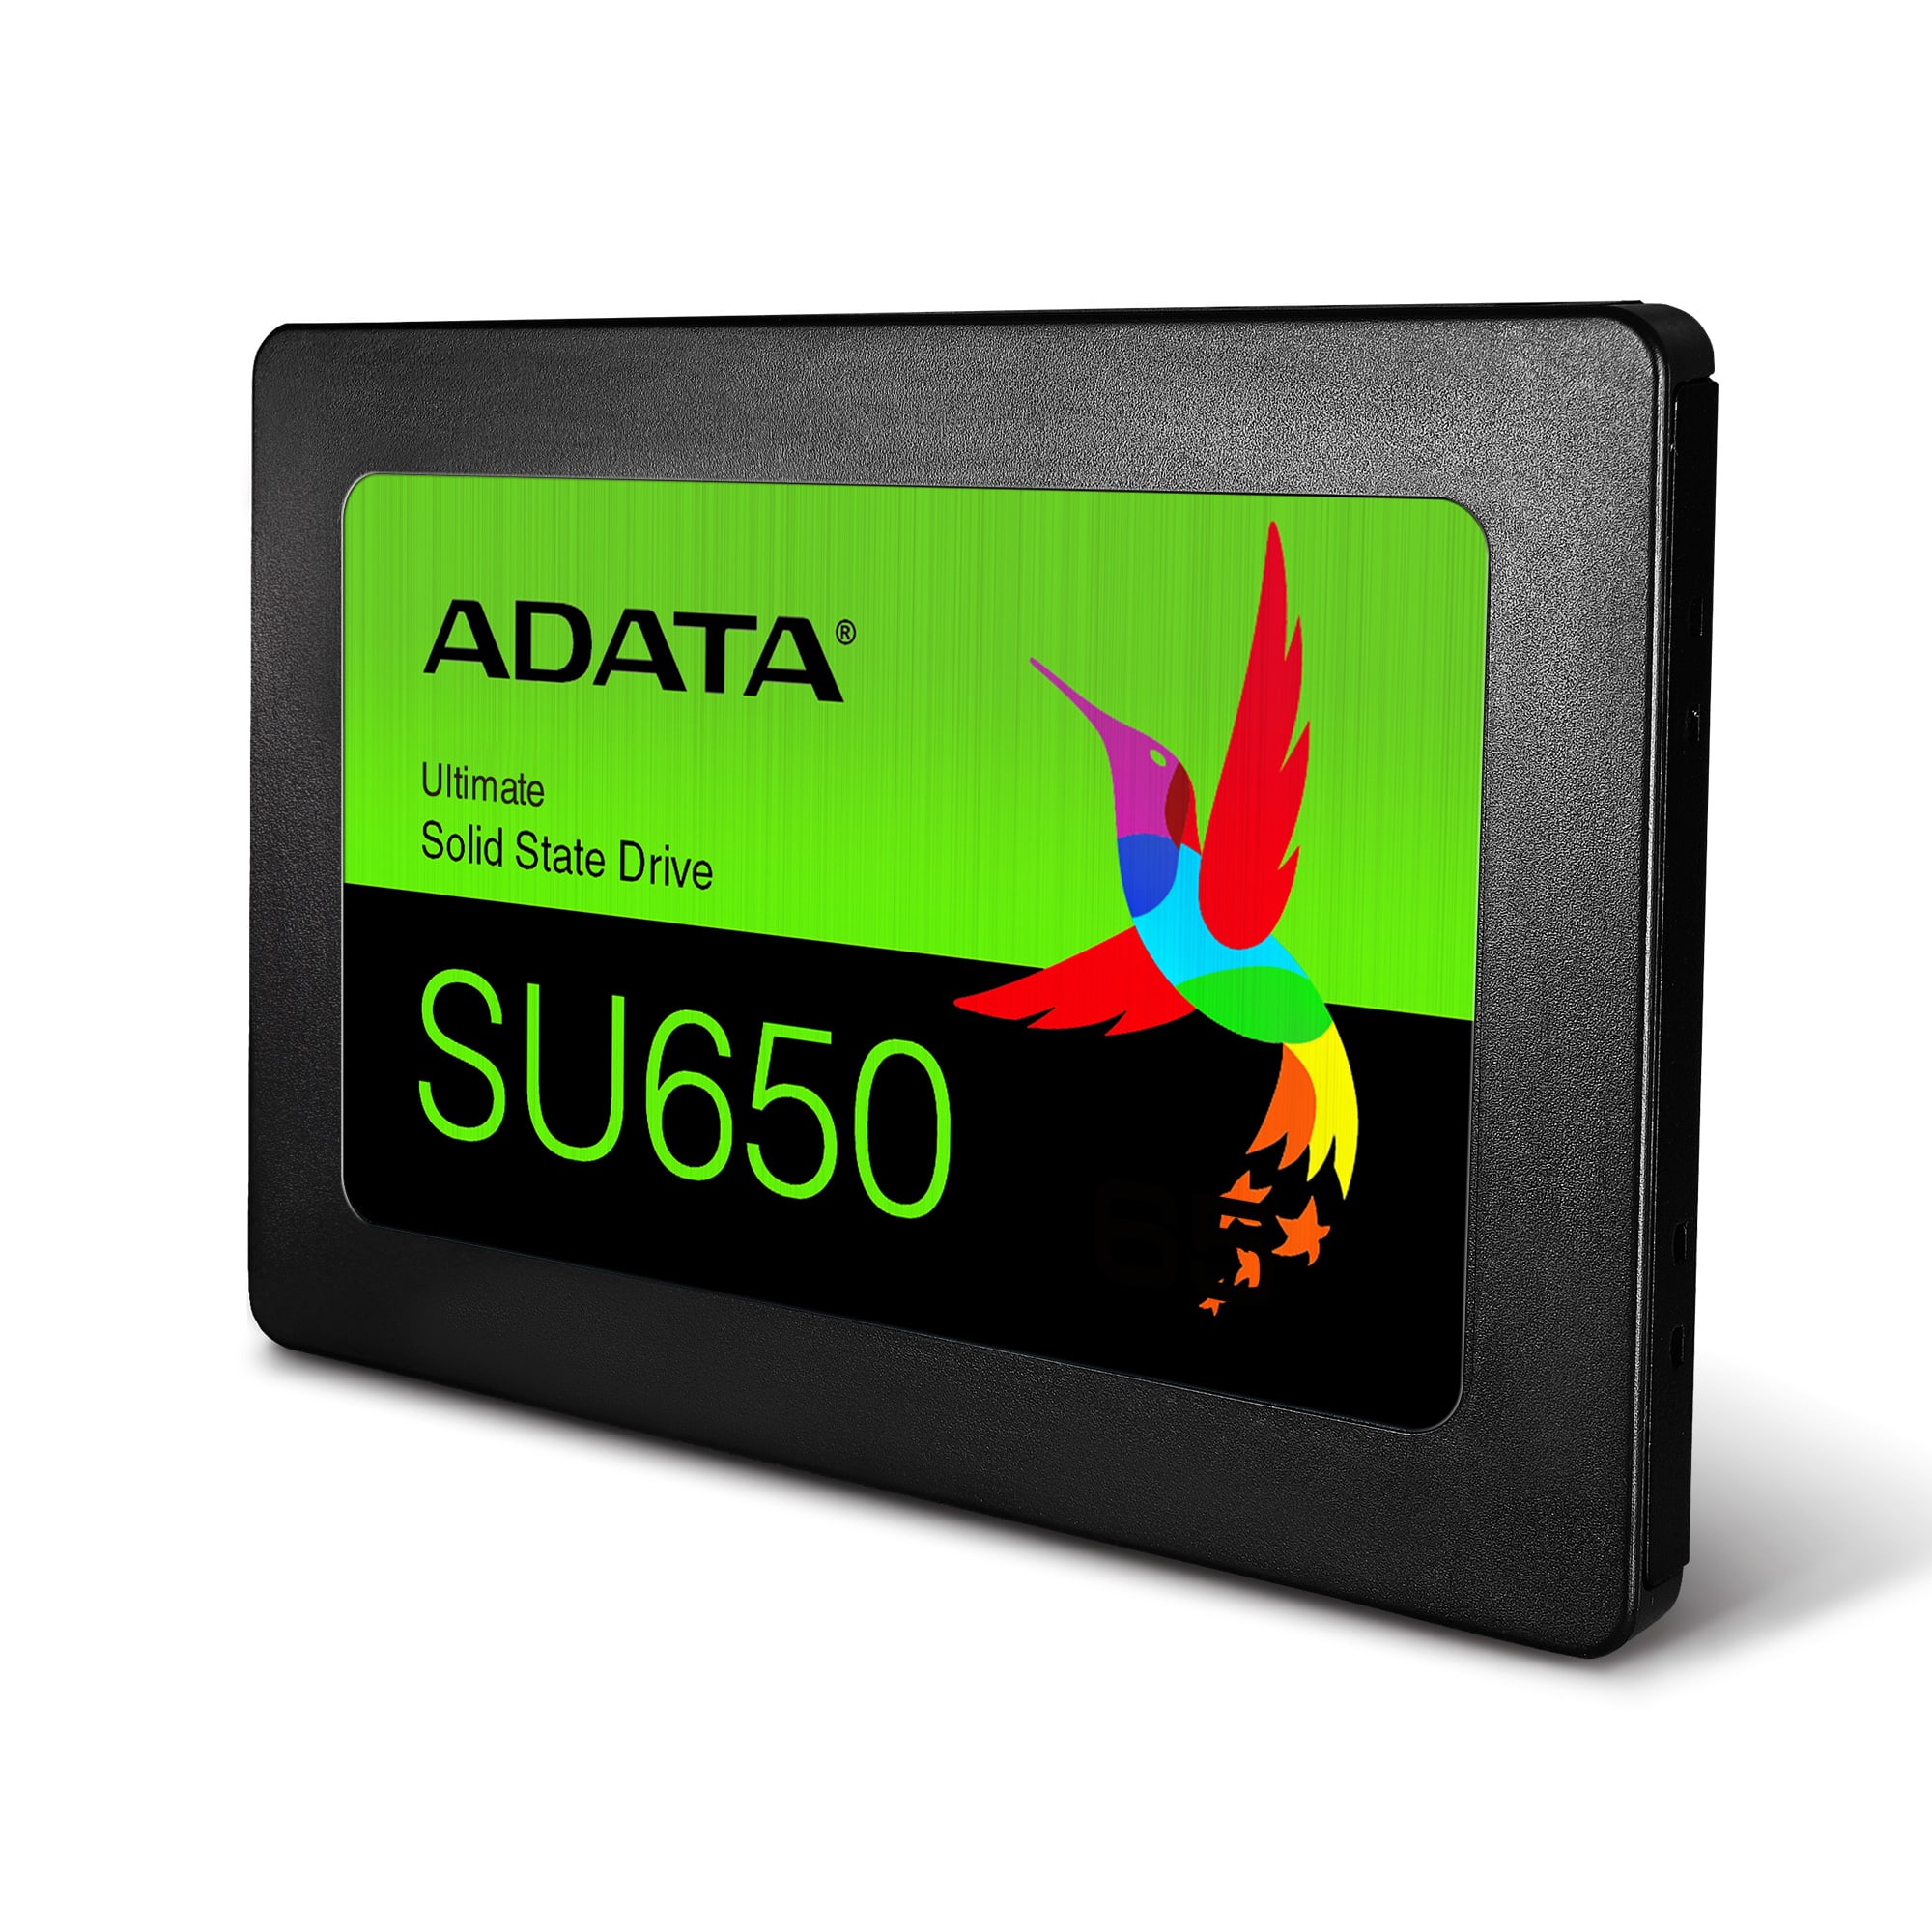 ADATA ULTIMATE SU650 2.5 240GB SOLID STATE DRIVE - ASU650SS240GTC